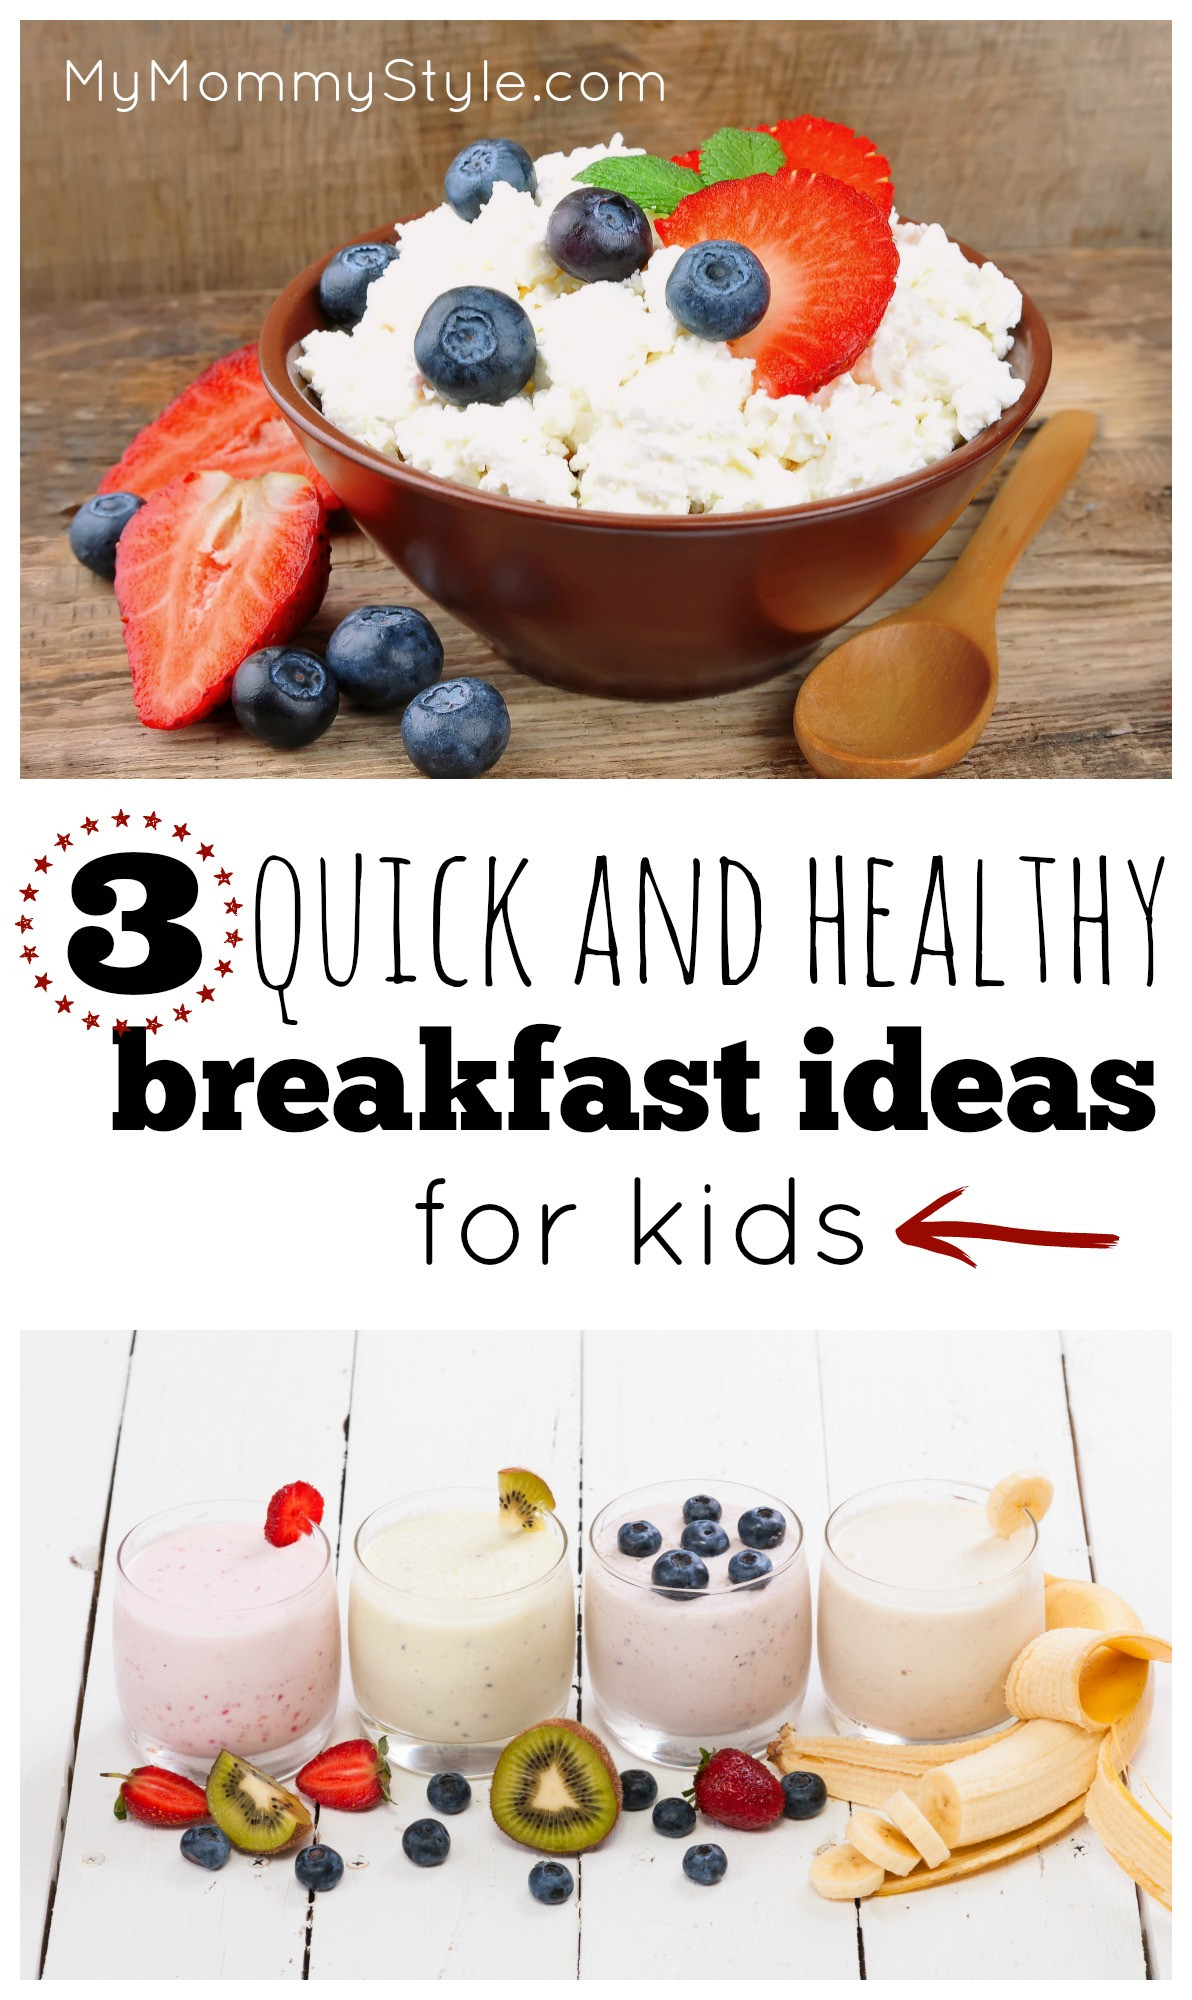 Easy Breakfast Ideas For Kids
 3 Simple and Healthy Breakfast Ideas My Mommy Style